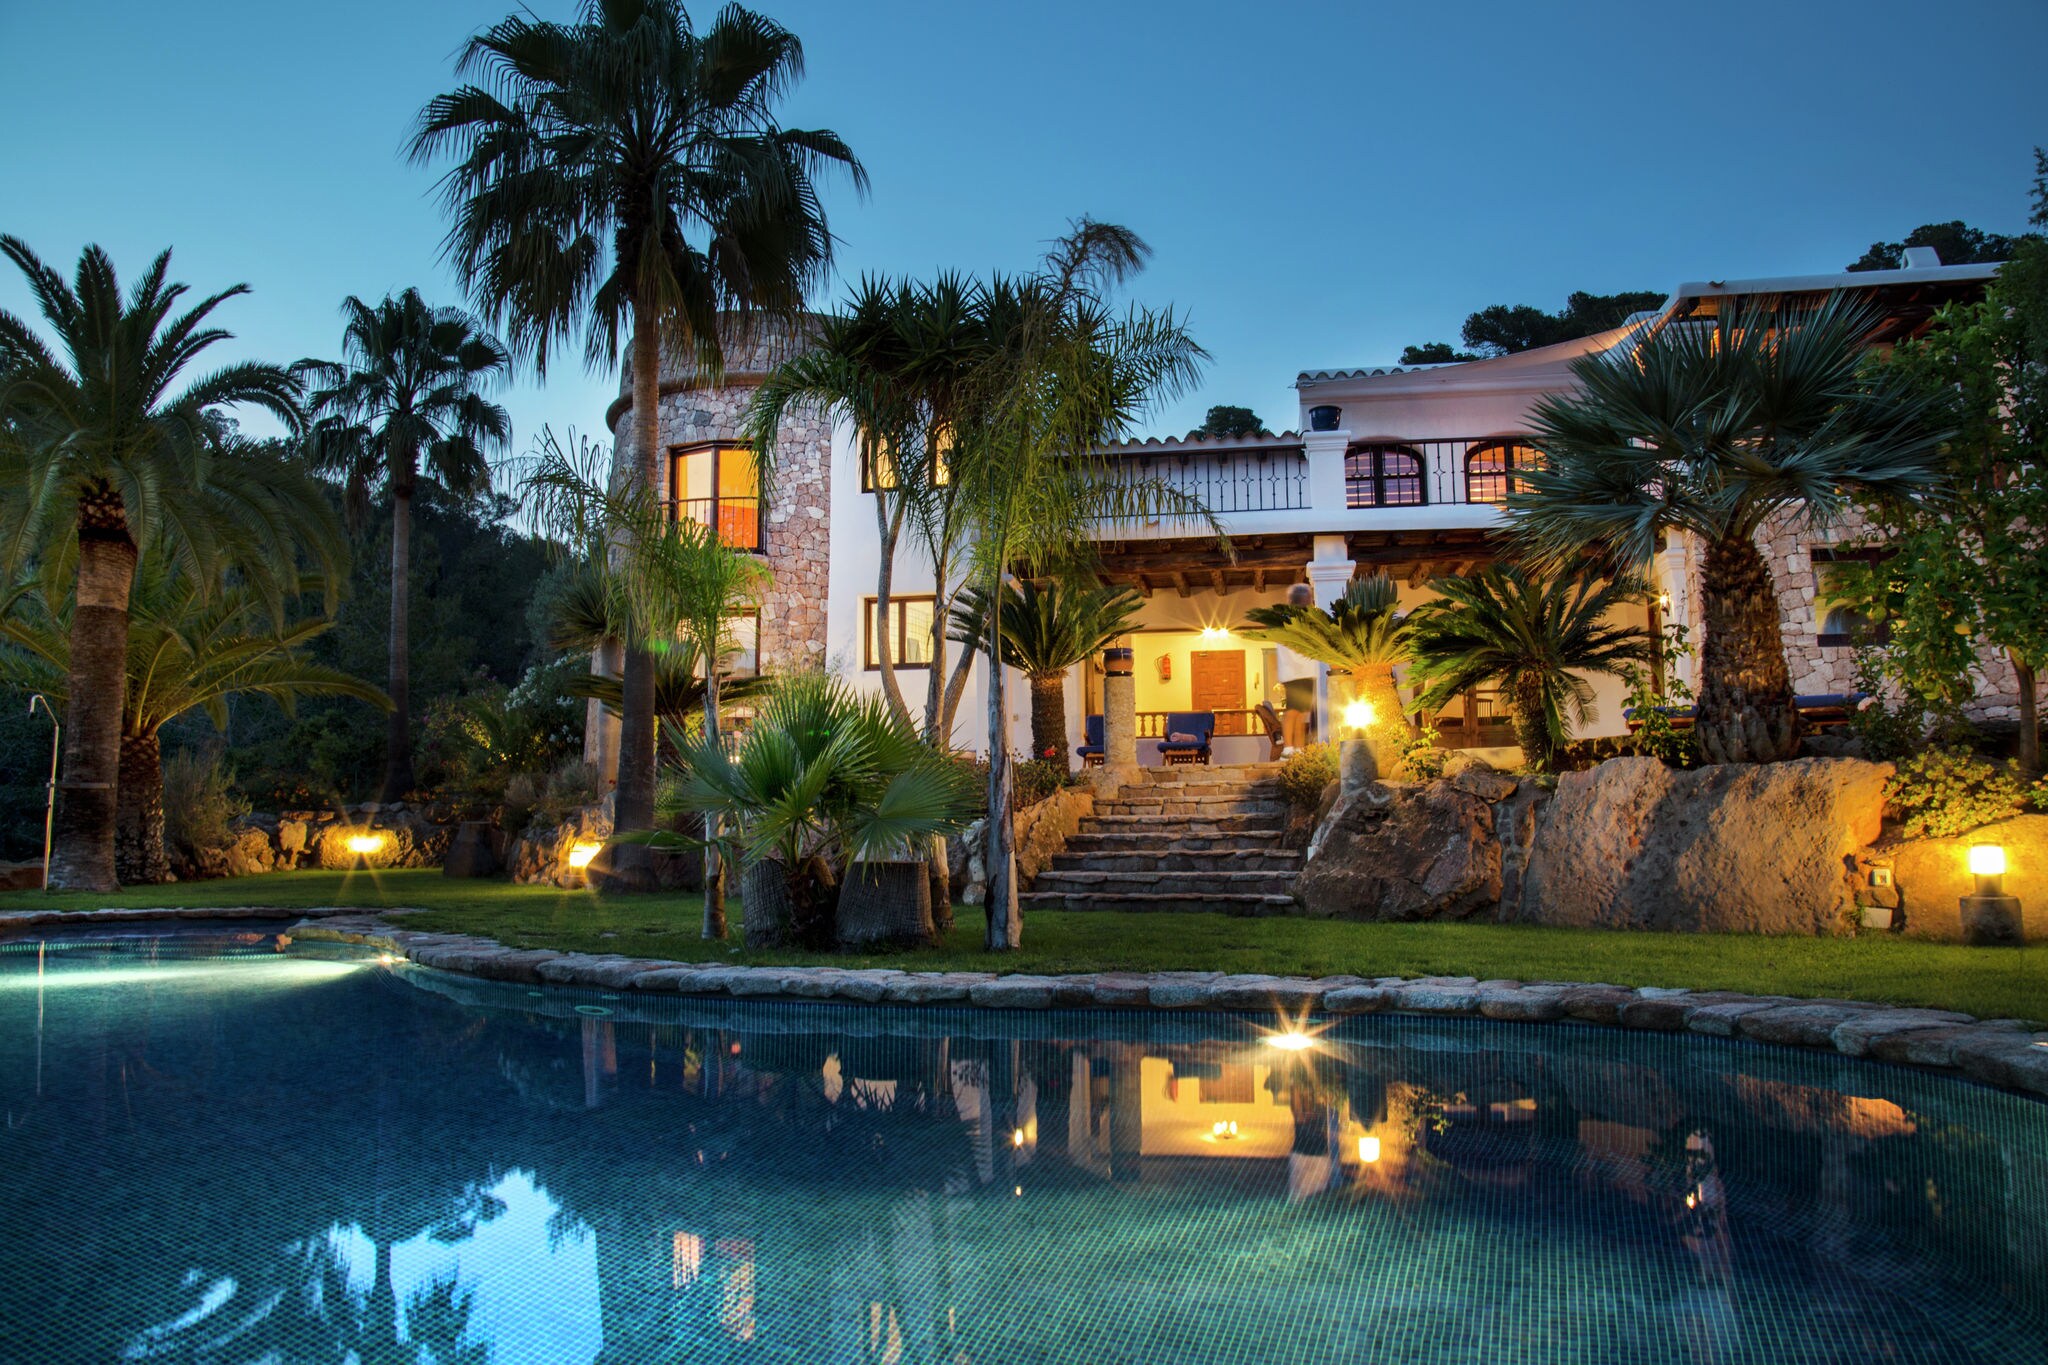 Spacious and luxurious villa